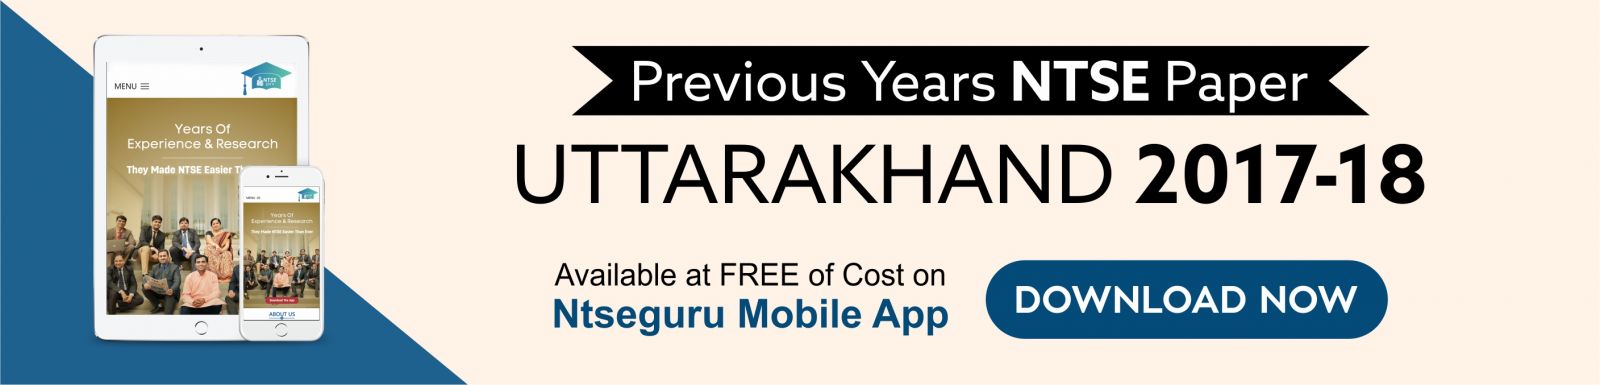 NTSE Previous Year Paper Uttarakhand 2017-18